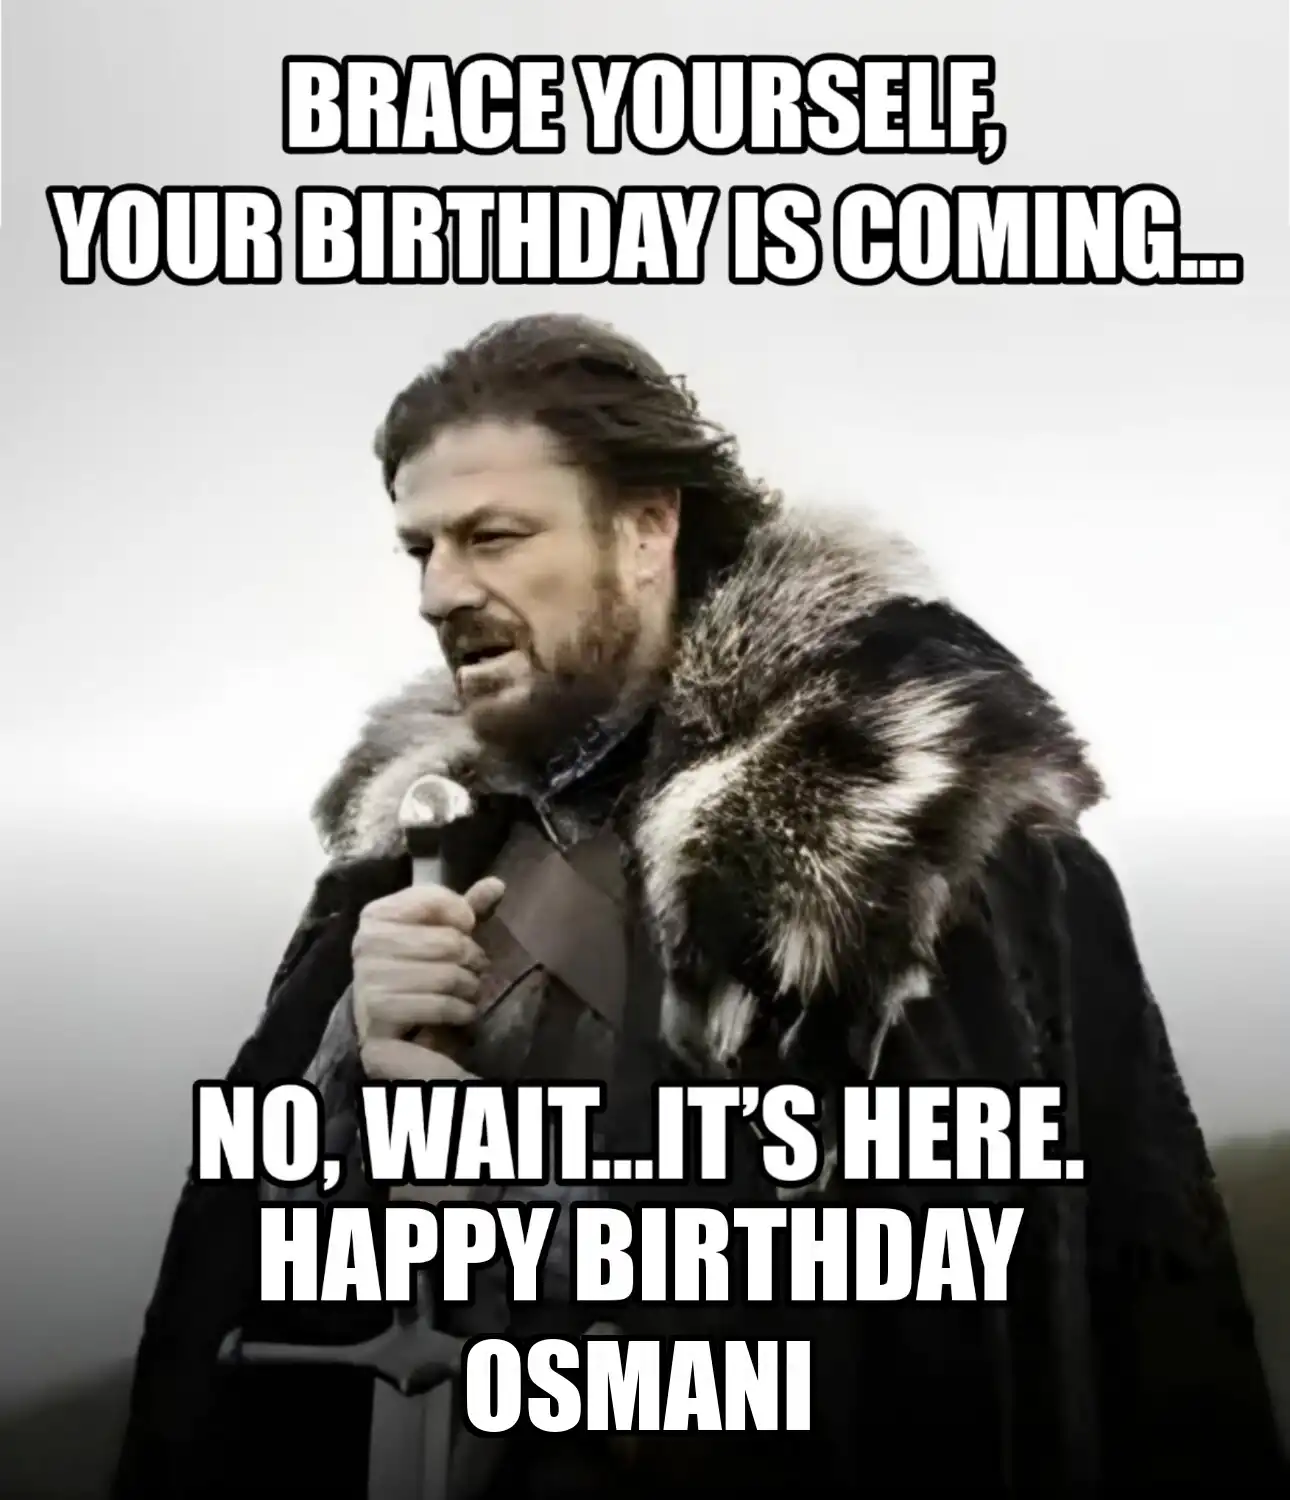 Happy Birthday Osmani Brace Yourself Your Birthday Is Coming Meme